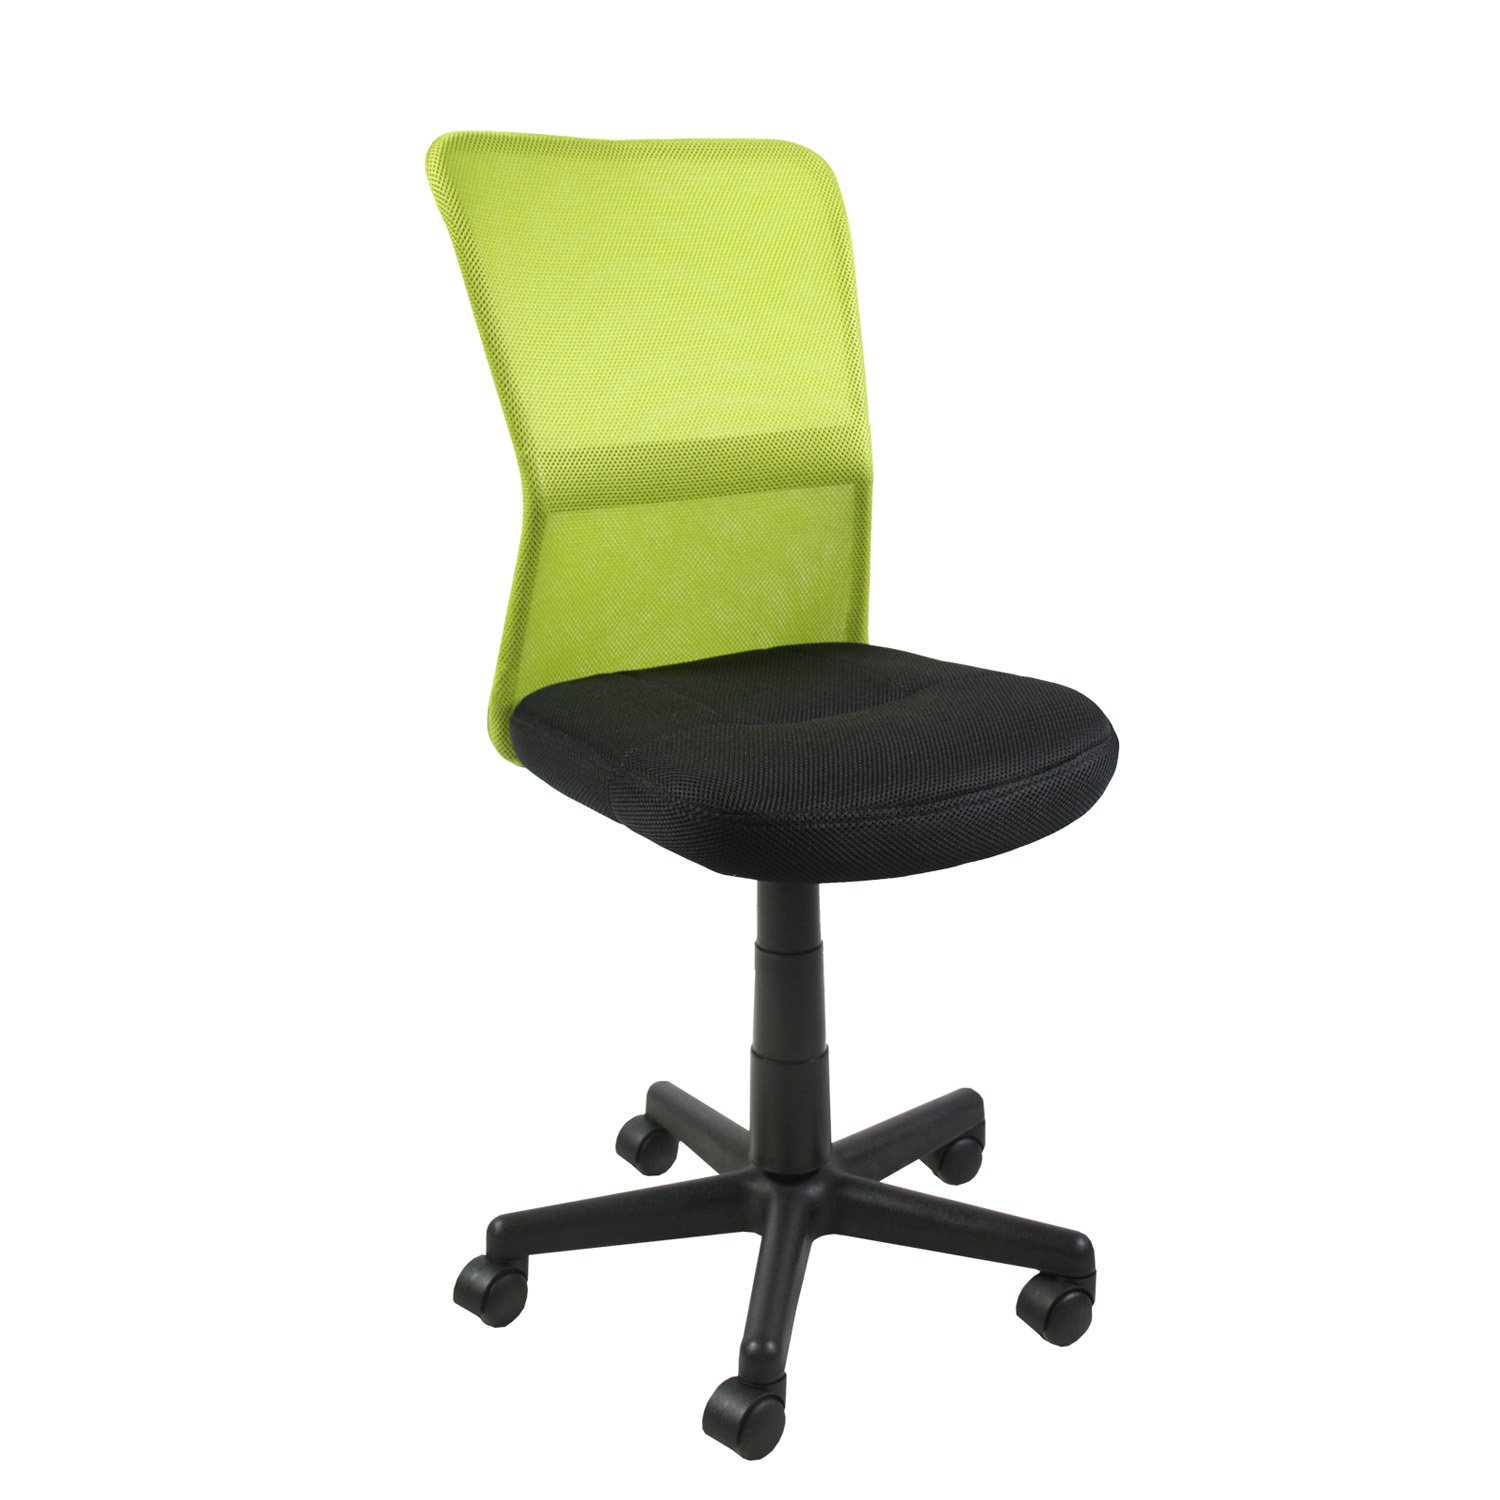 Biuro kėdė BELICE, 41x42x83-93 cm, žalia